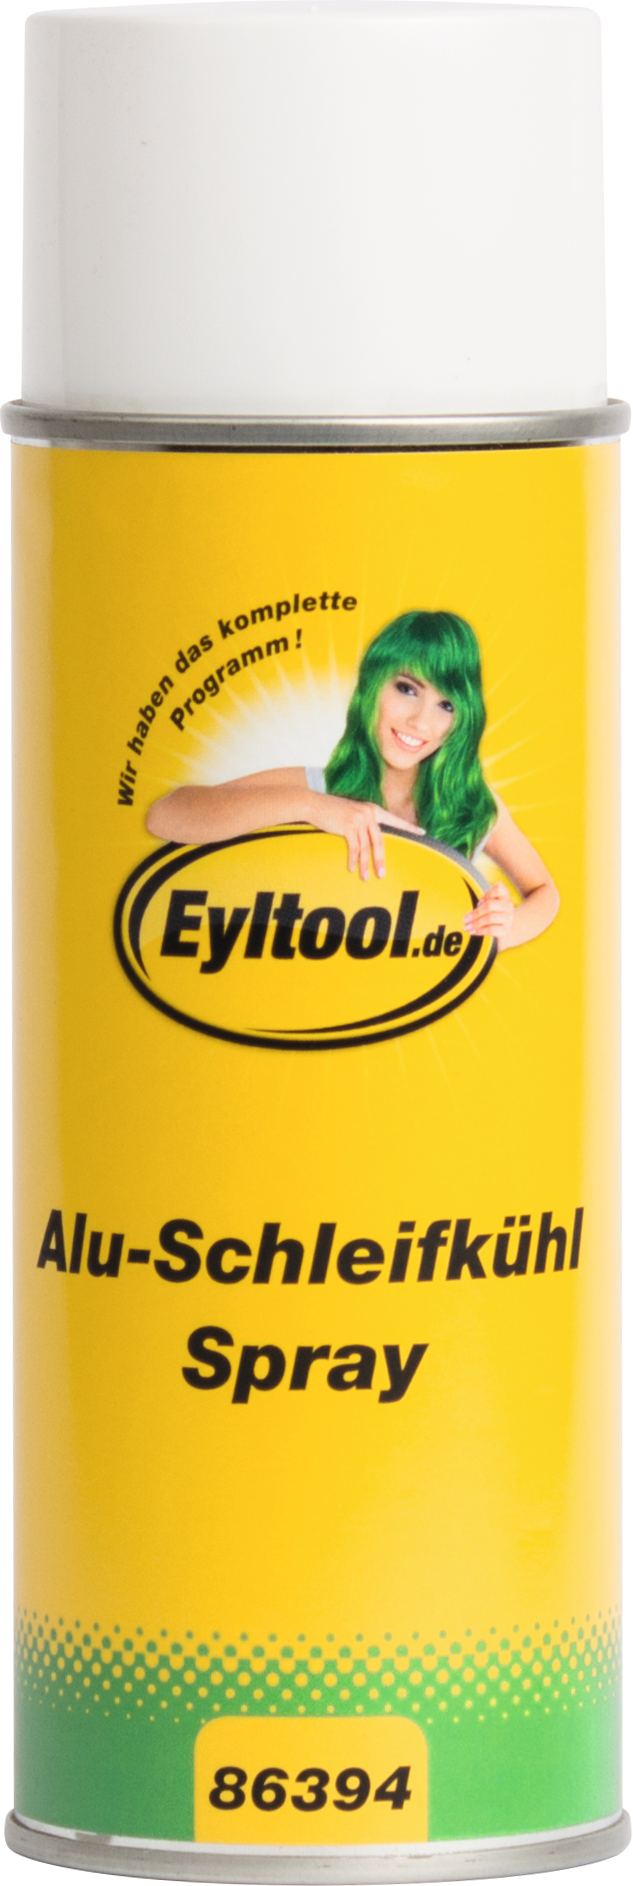 Aluschleifkühl Spray 0,4l